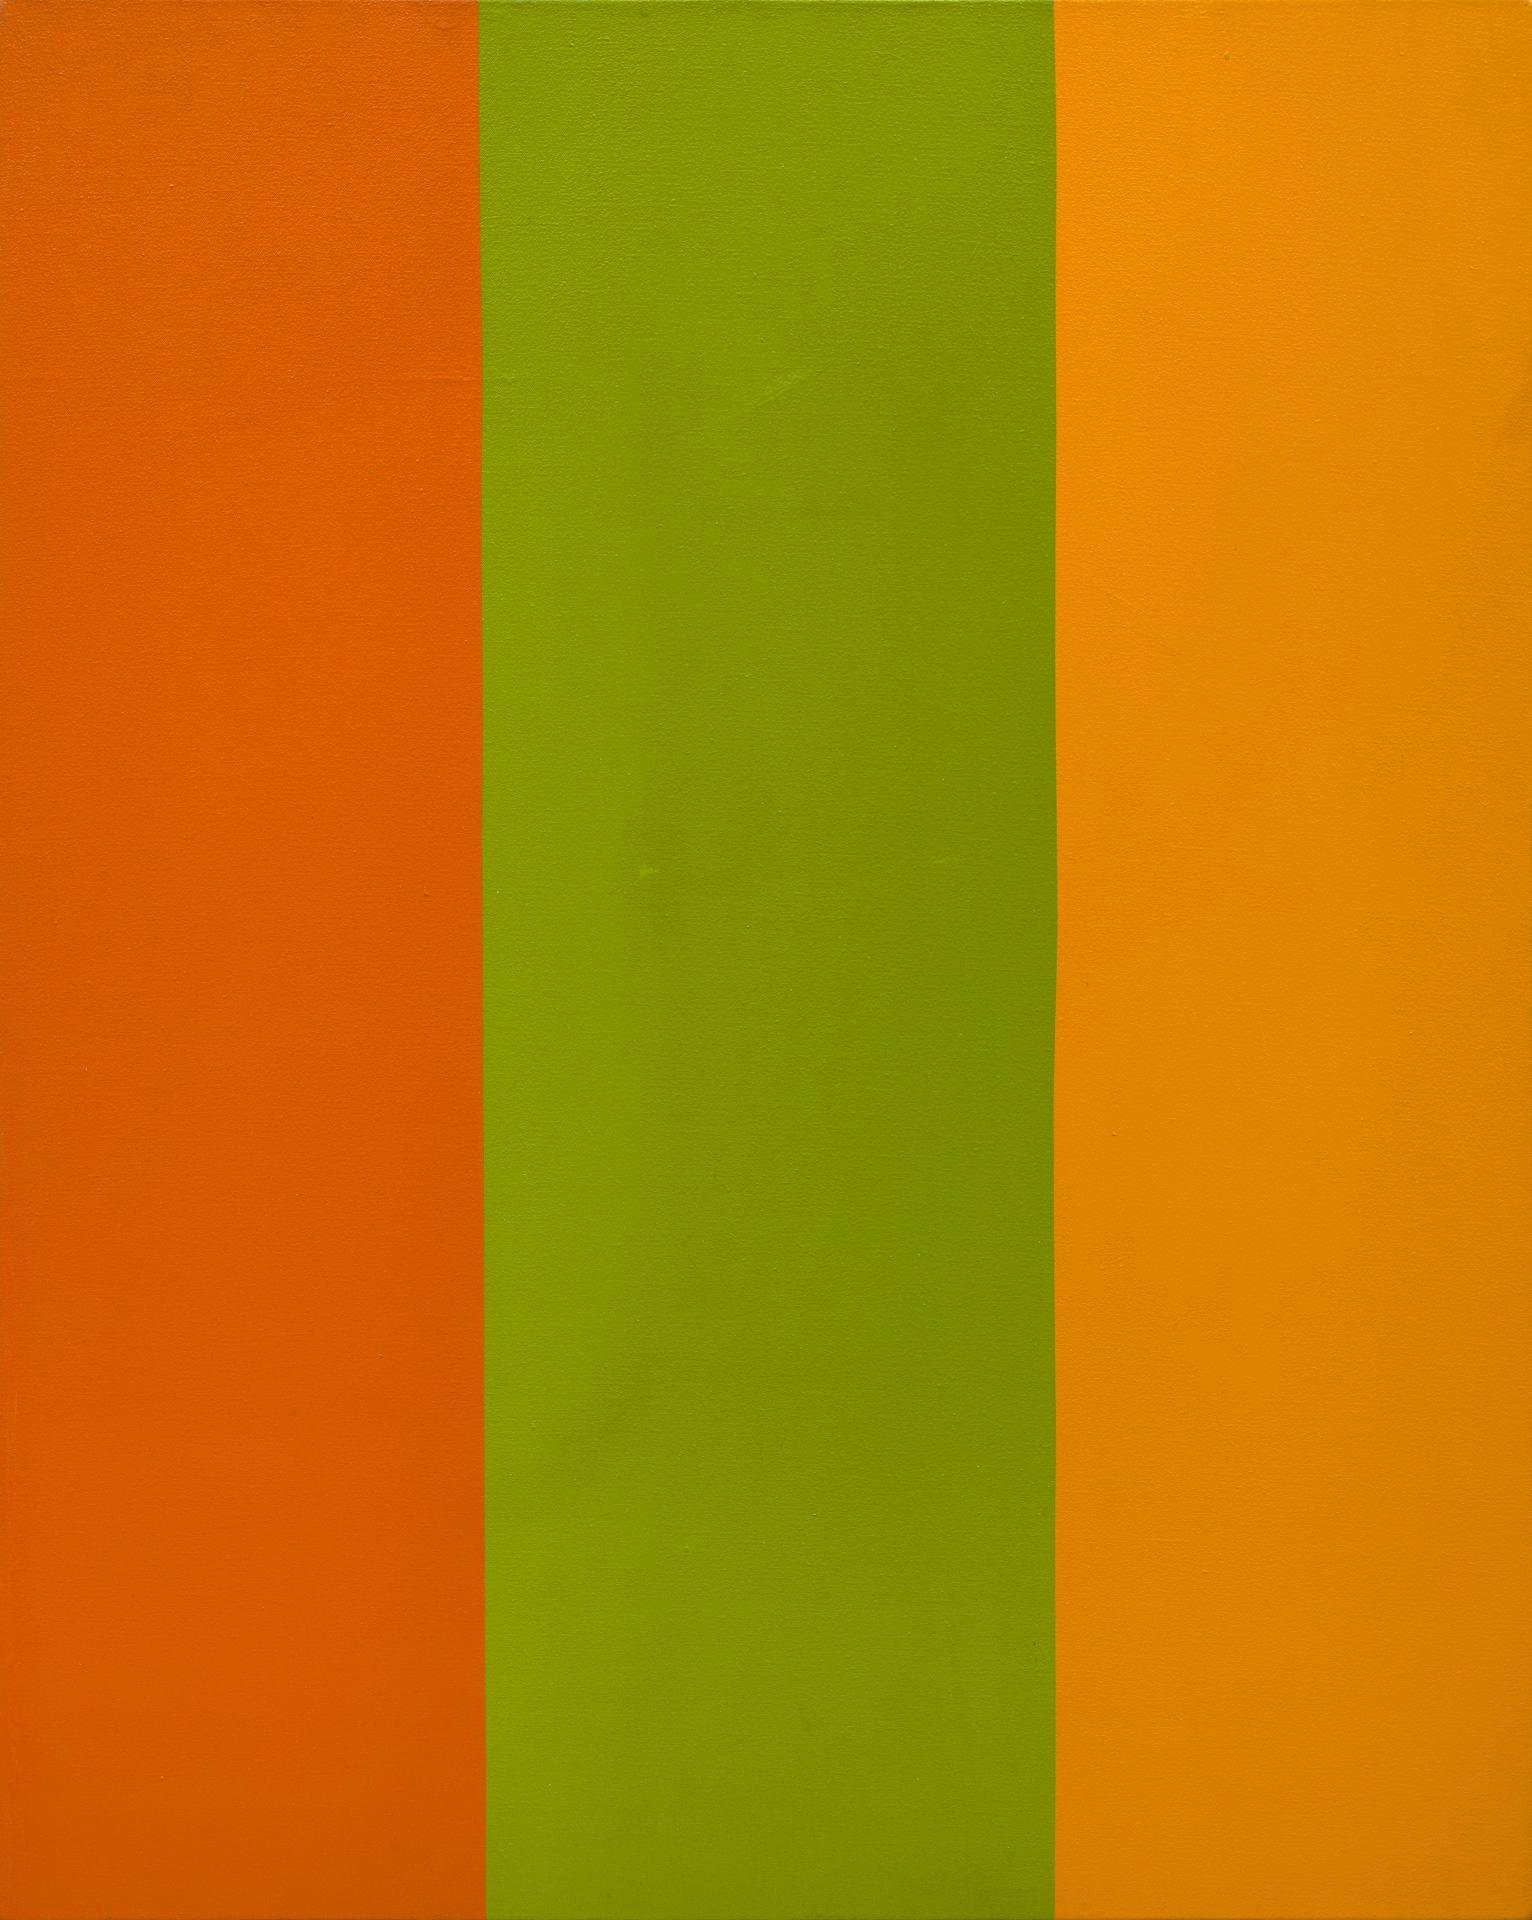 Guido Molinari (1933-2004) - Sériel vert-orange, 1968